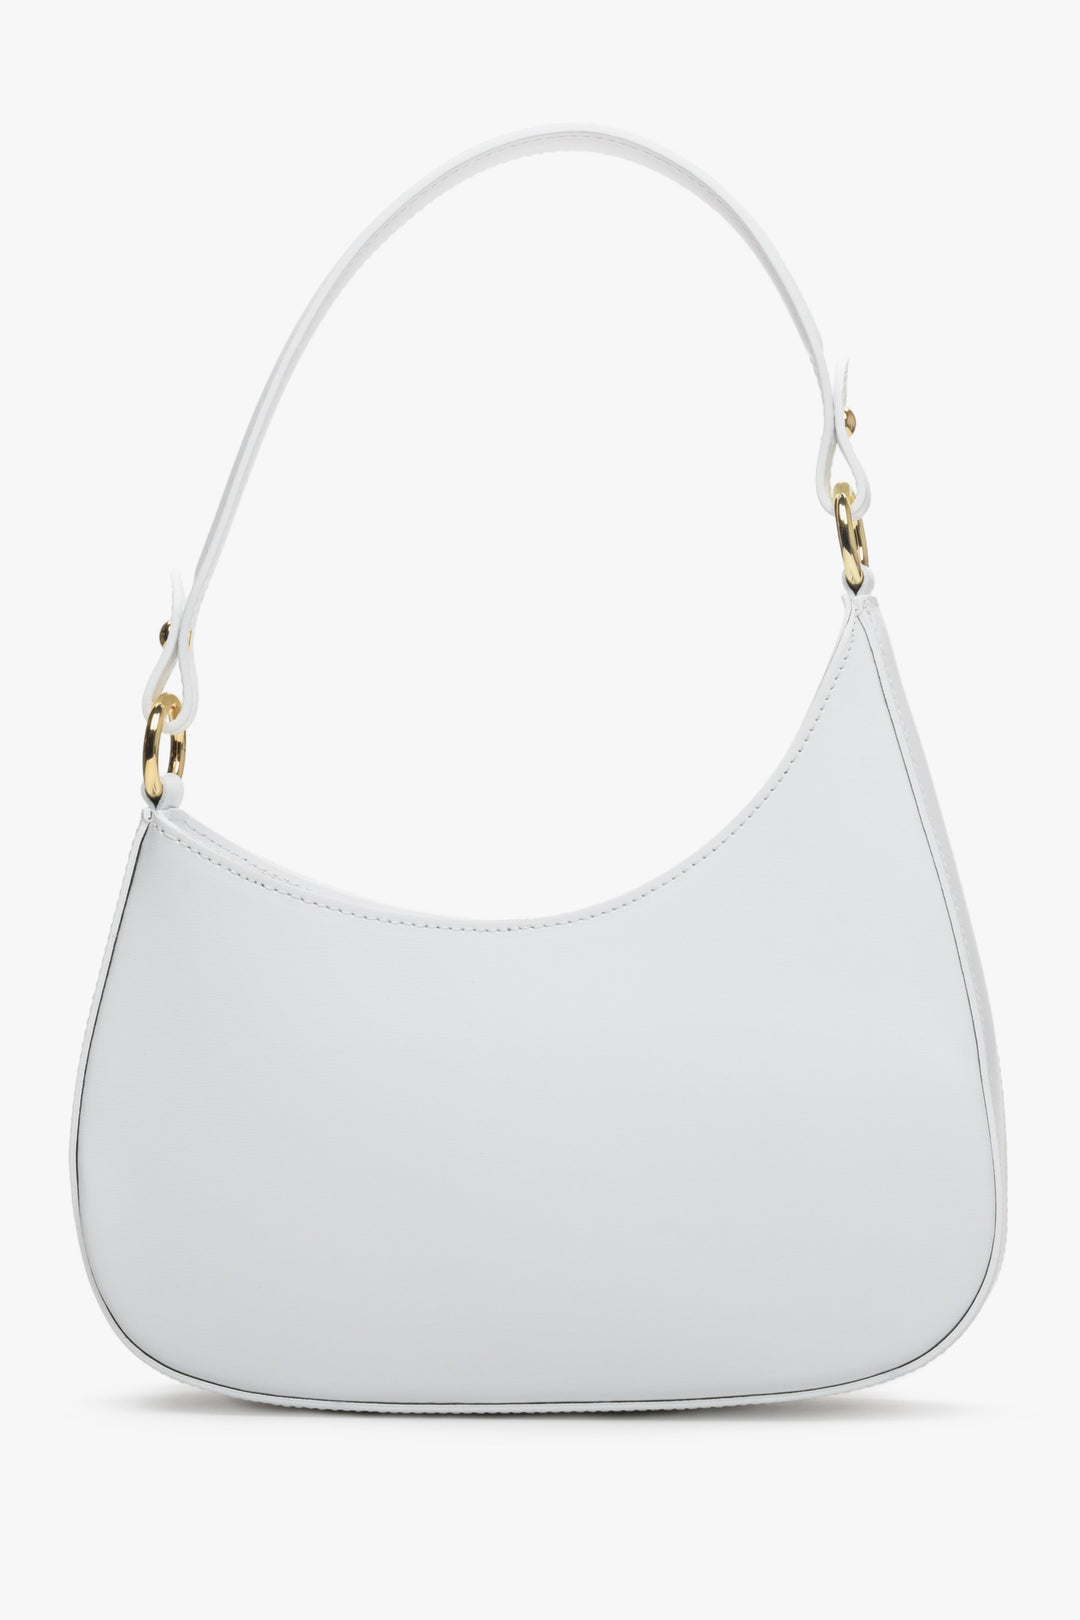 Estro women's handbag in white natural leather sewn in Italy.